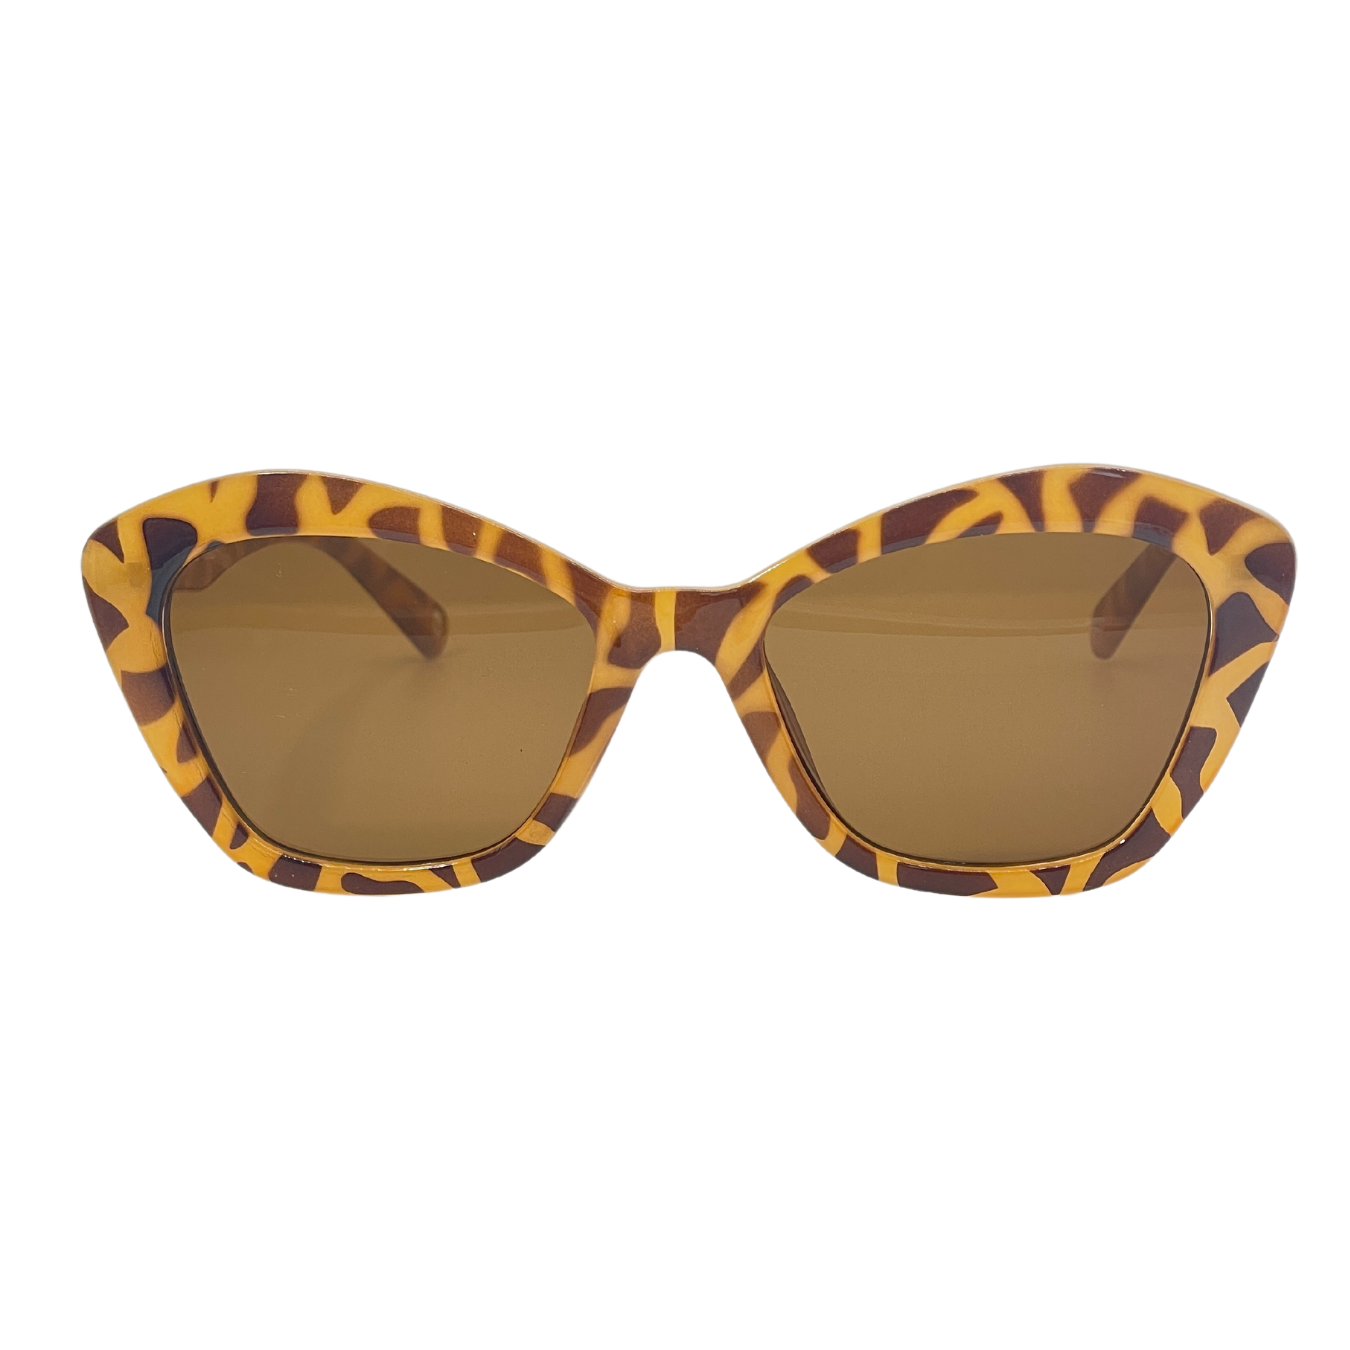 Coral Gables Sunglasses - Woodensun Sunglasses | Eco-fashion eyewear